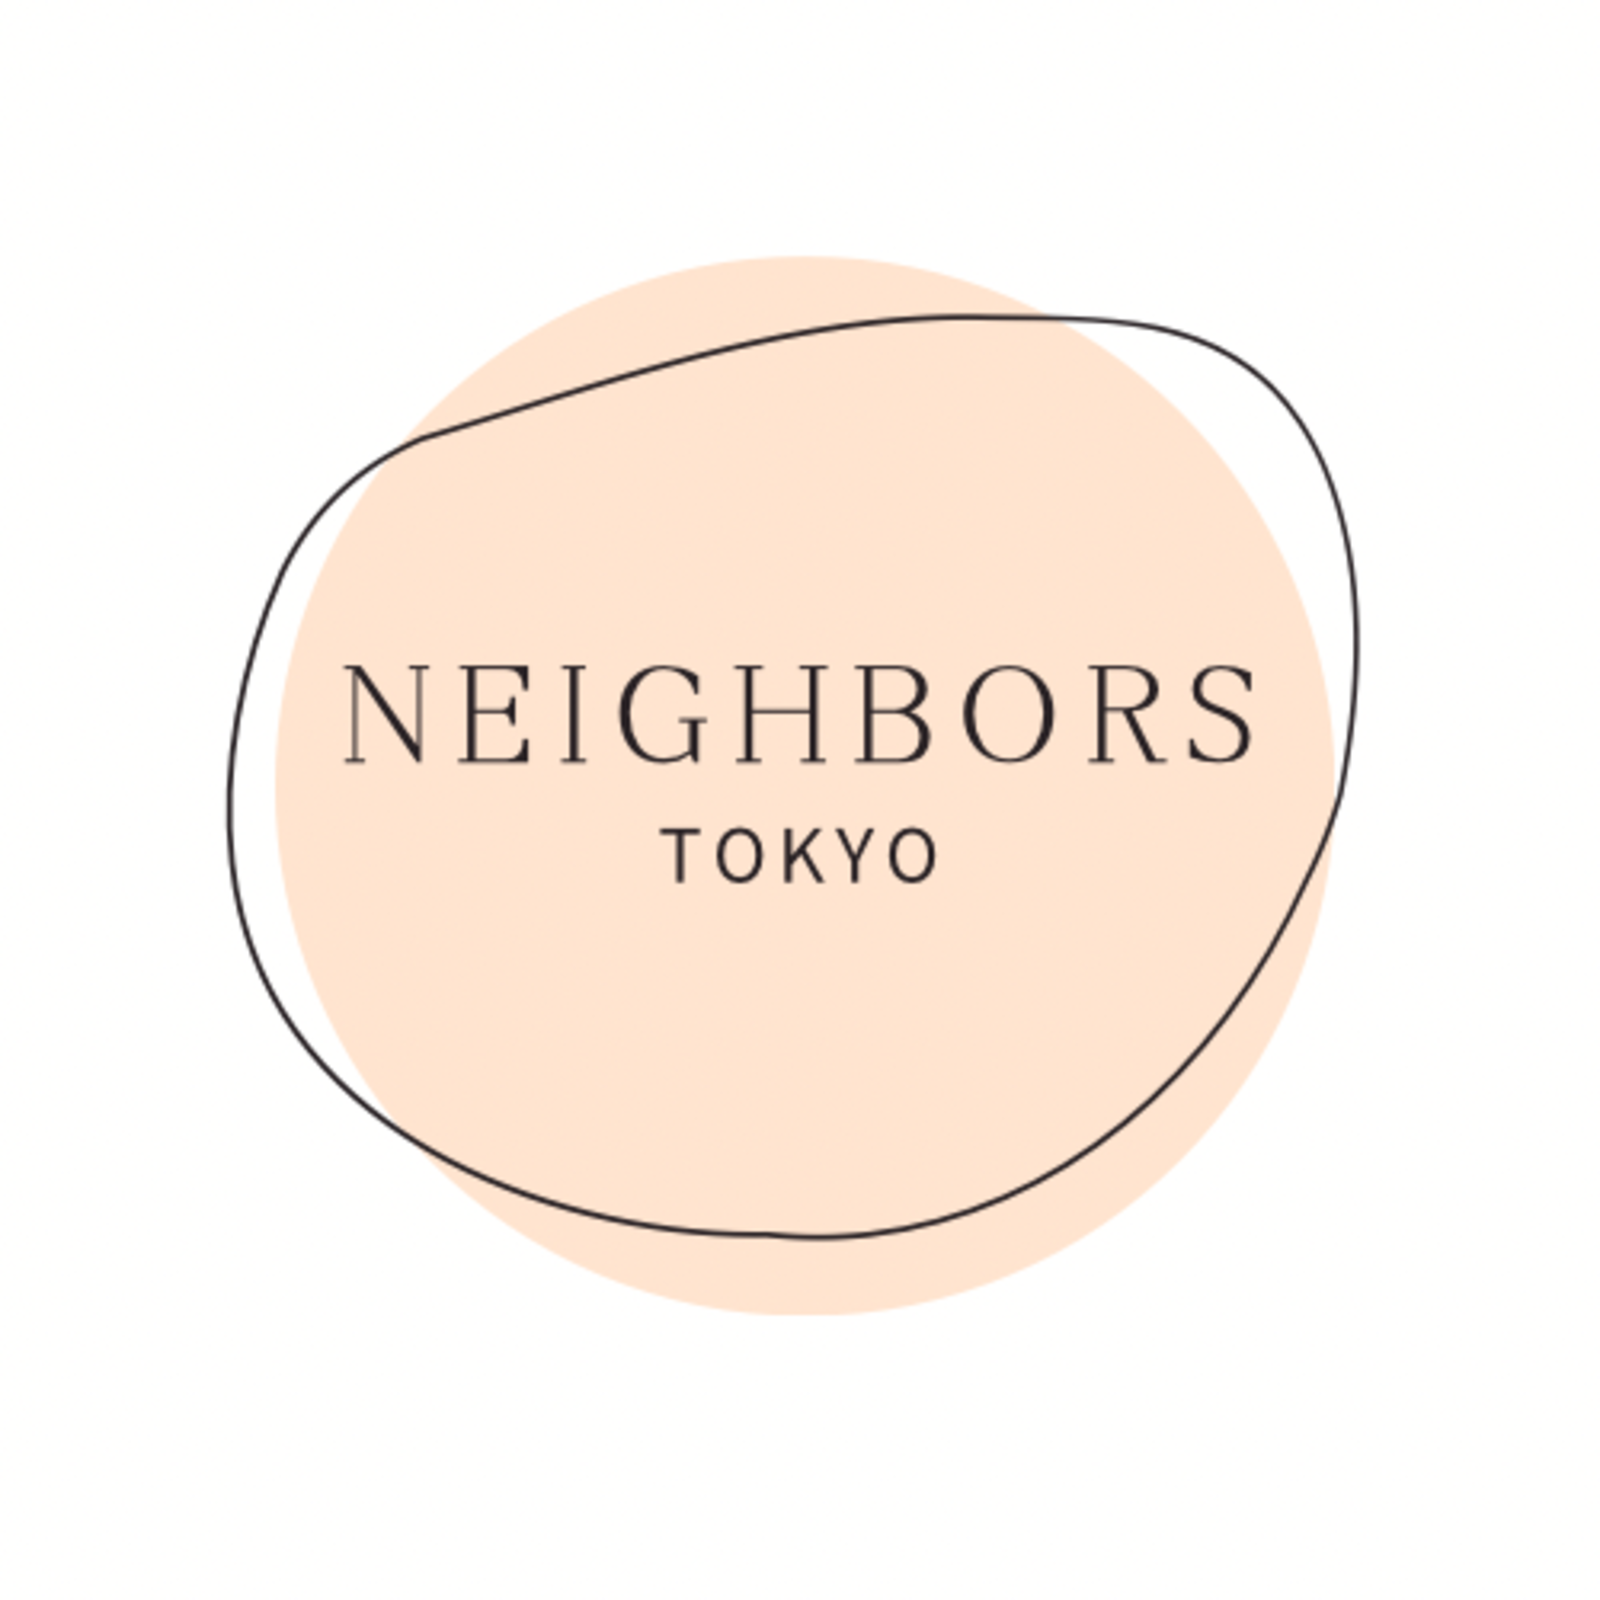 Neighbors Tokyo